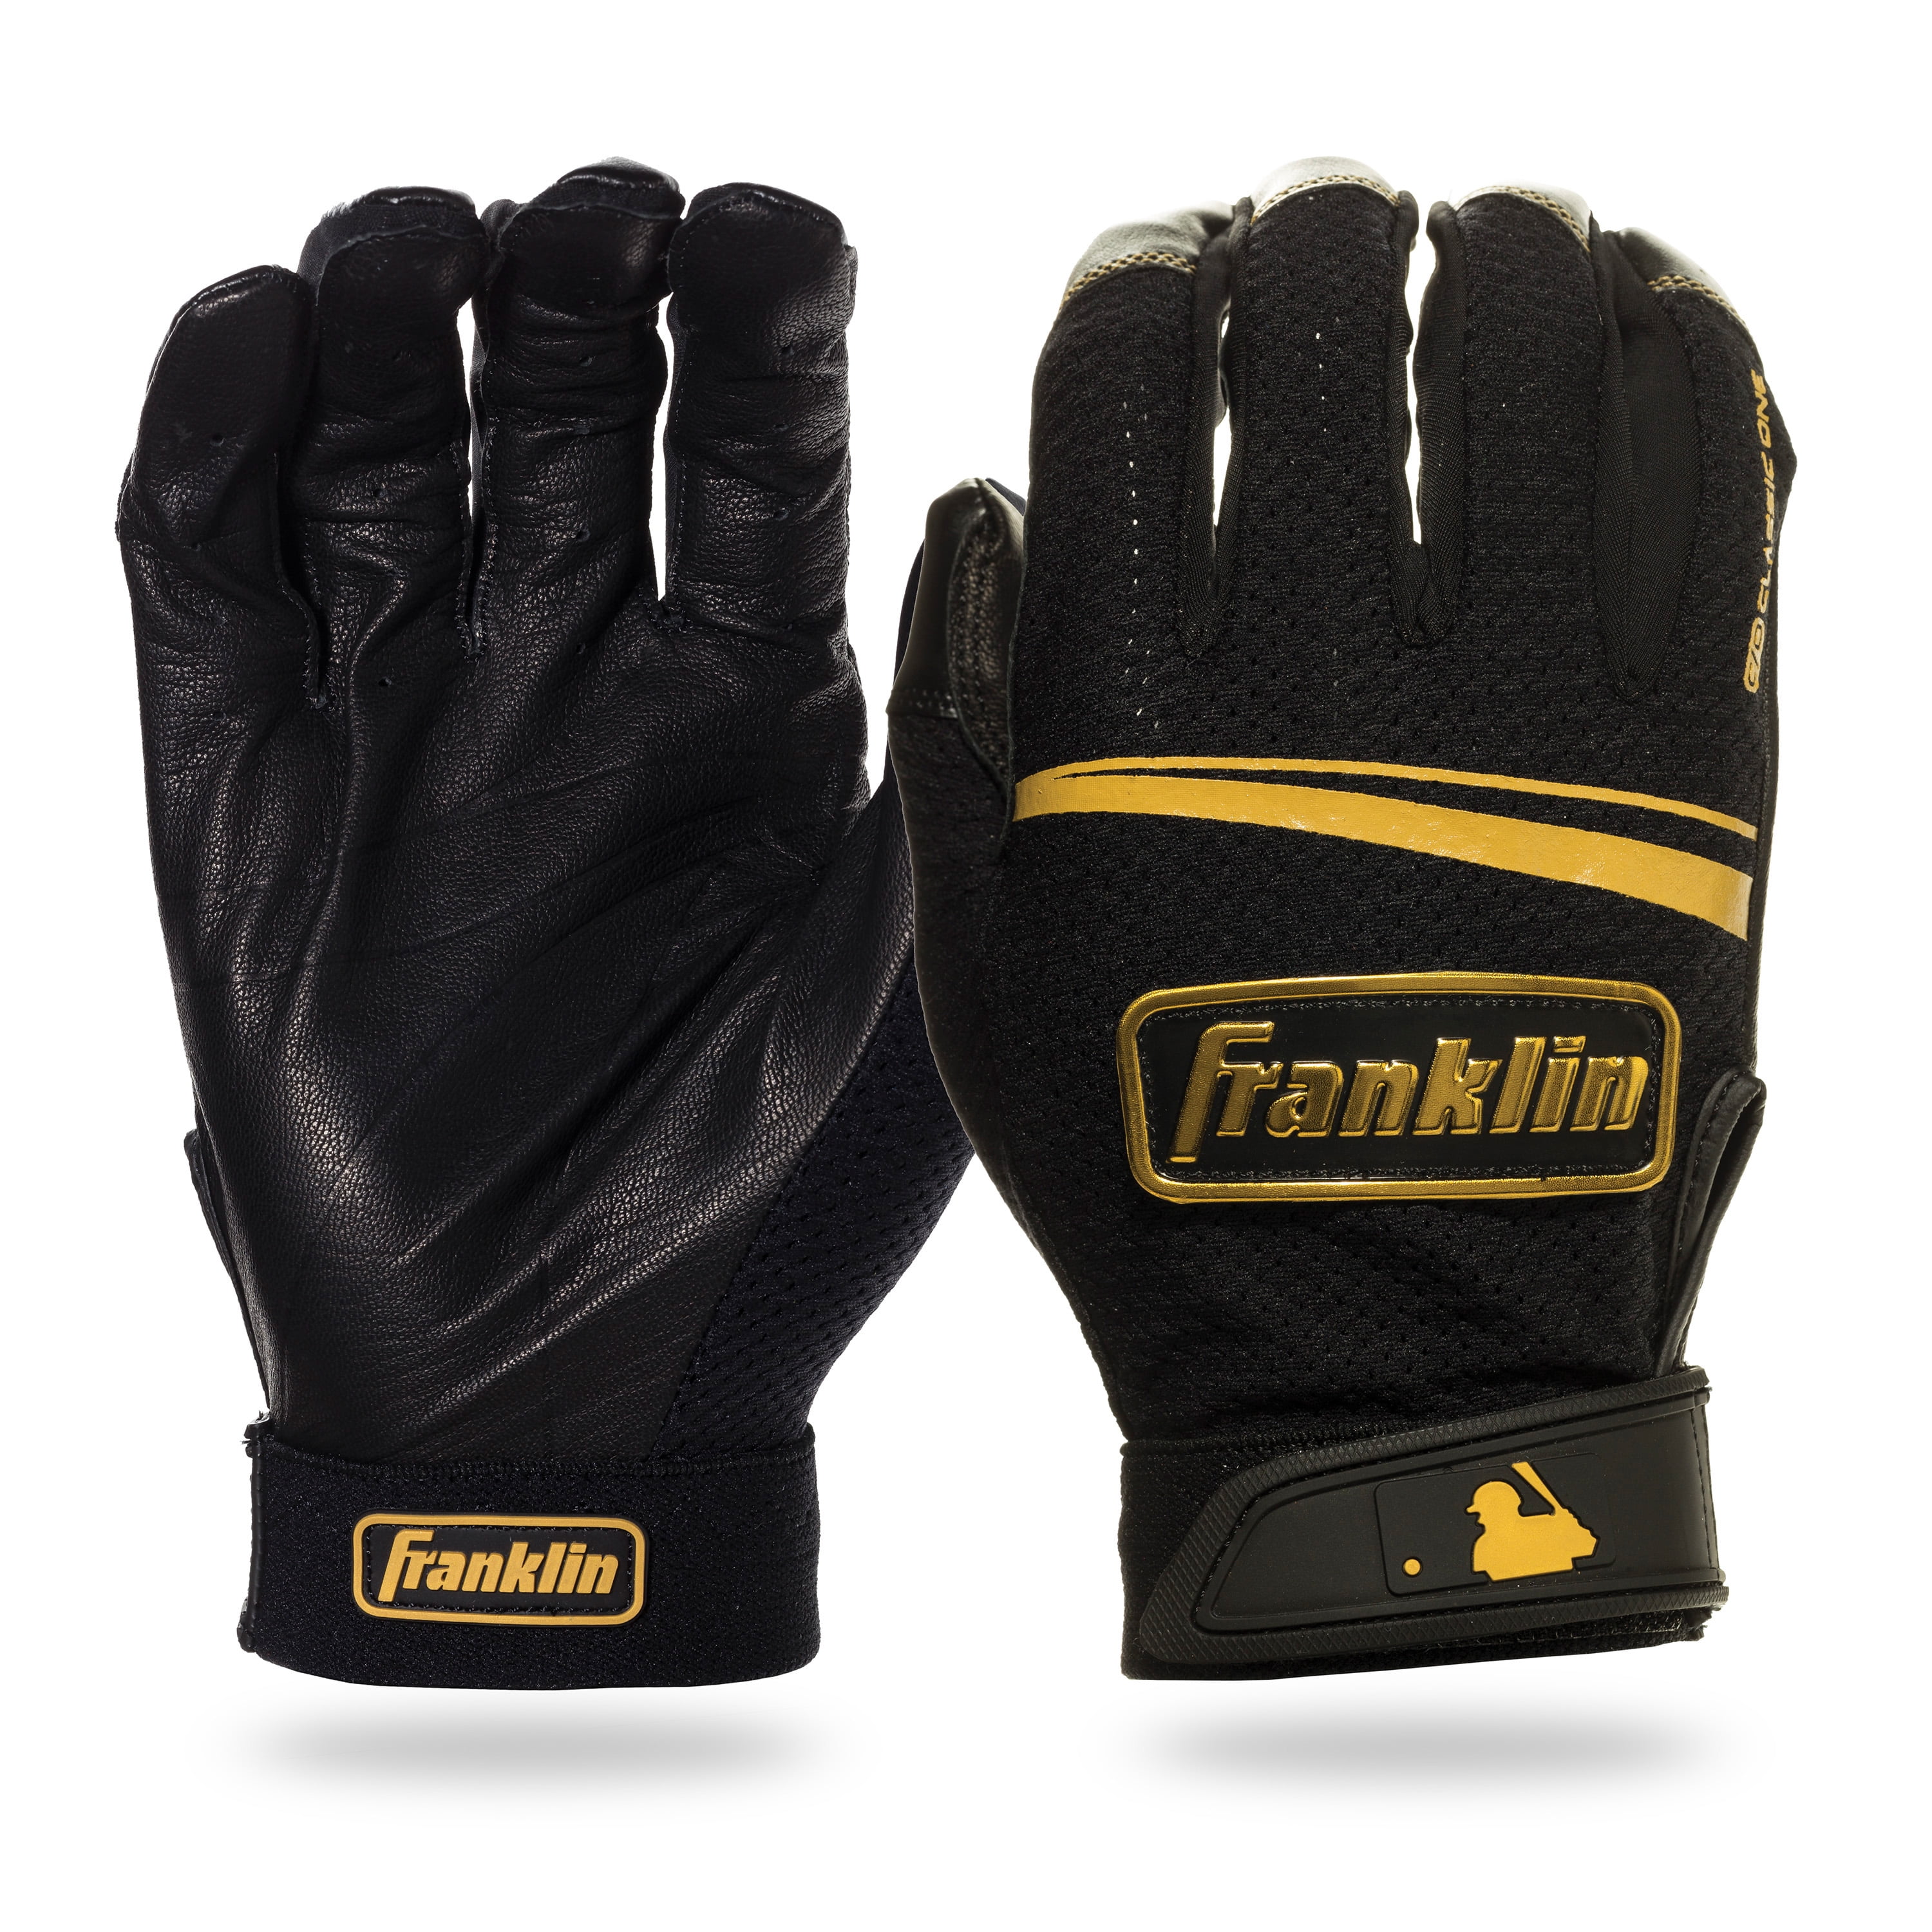 Franklin Sports MLB Classic One LT Baseball Batting Gloves - Black/Gold -  Adult Medium - Pair 